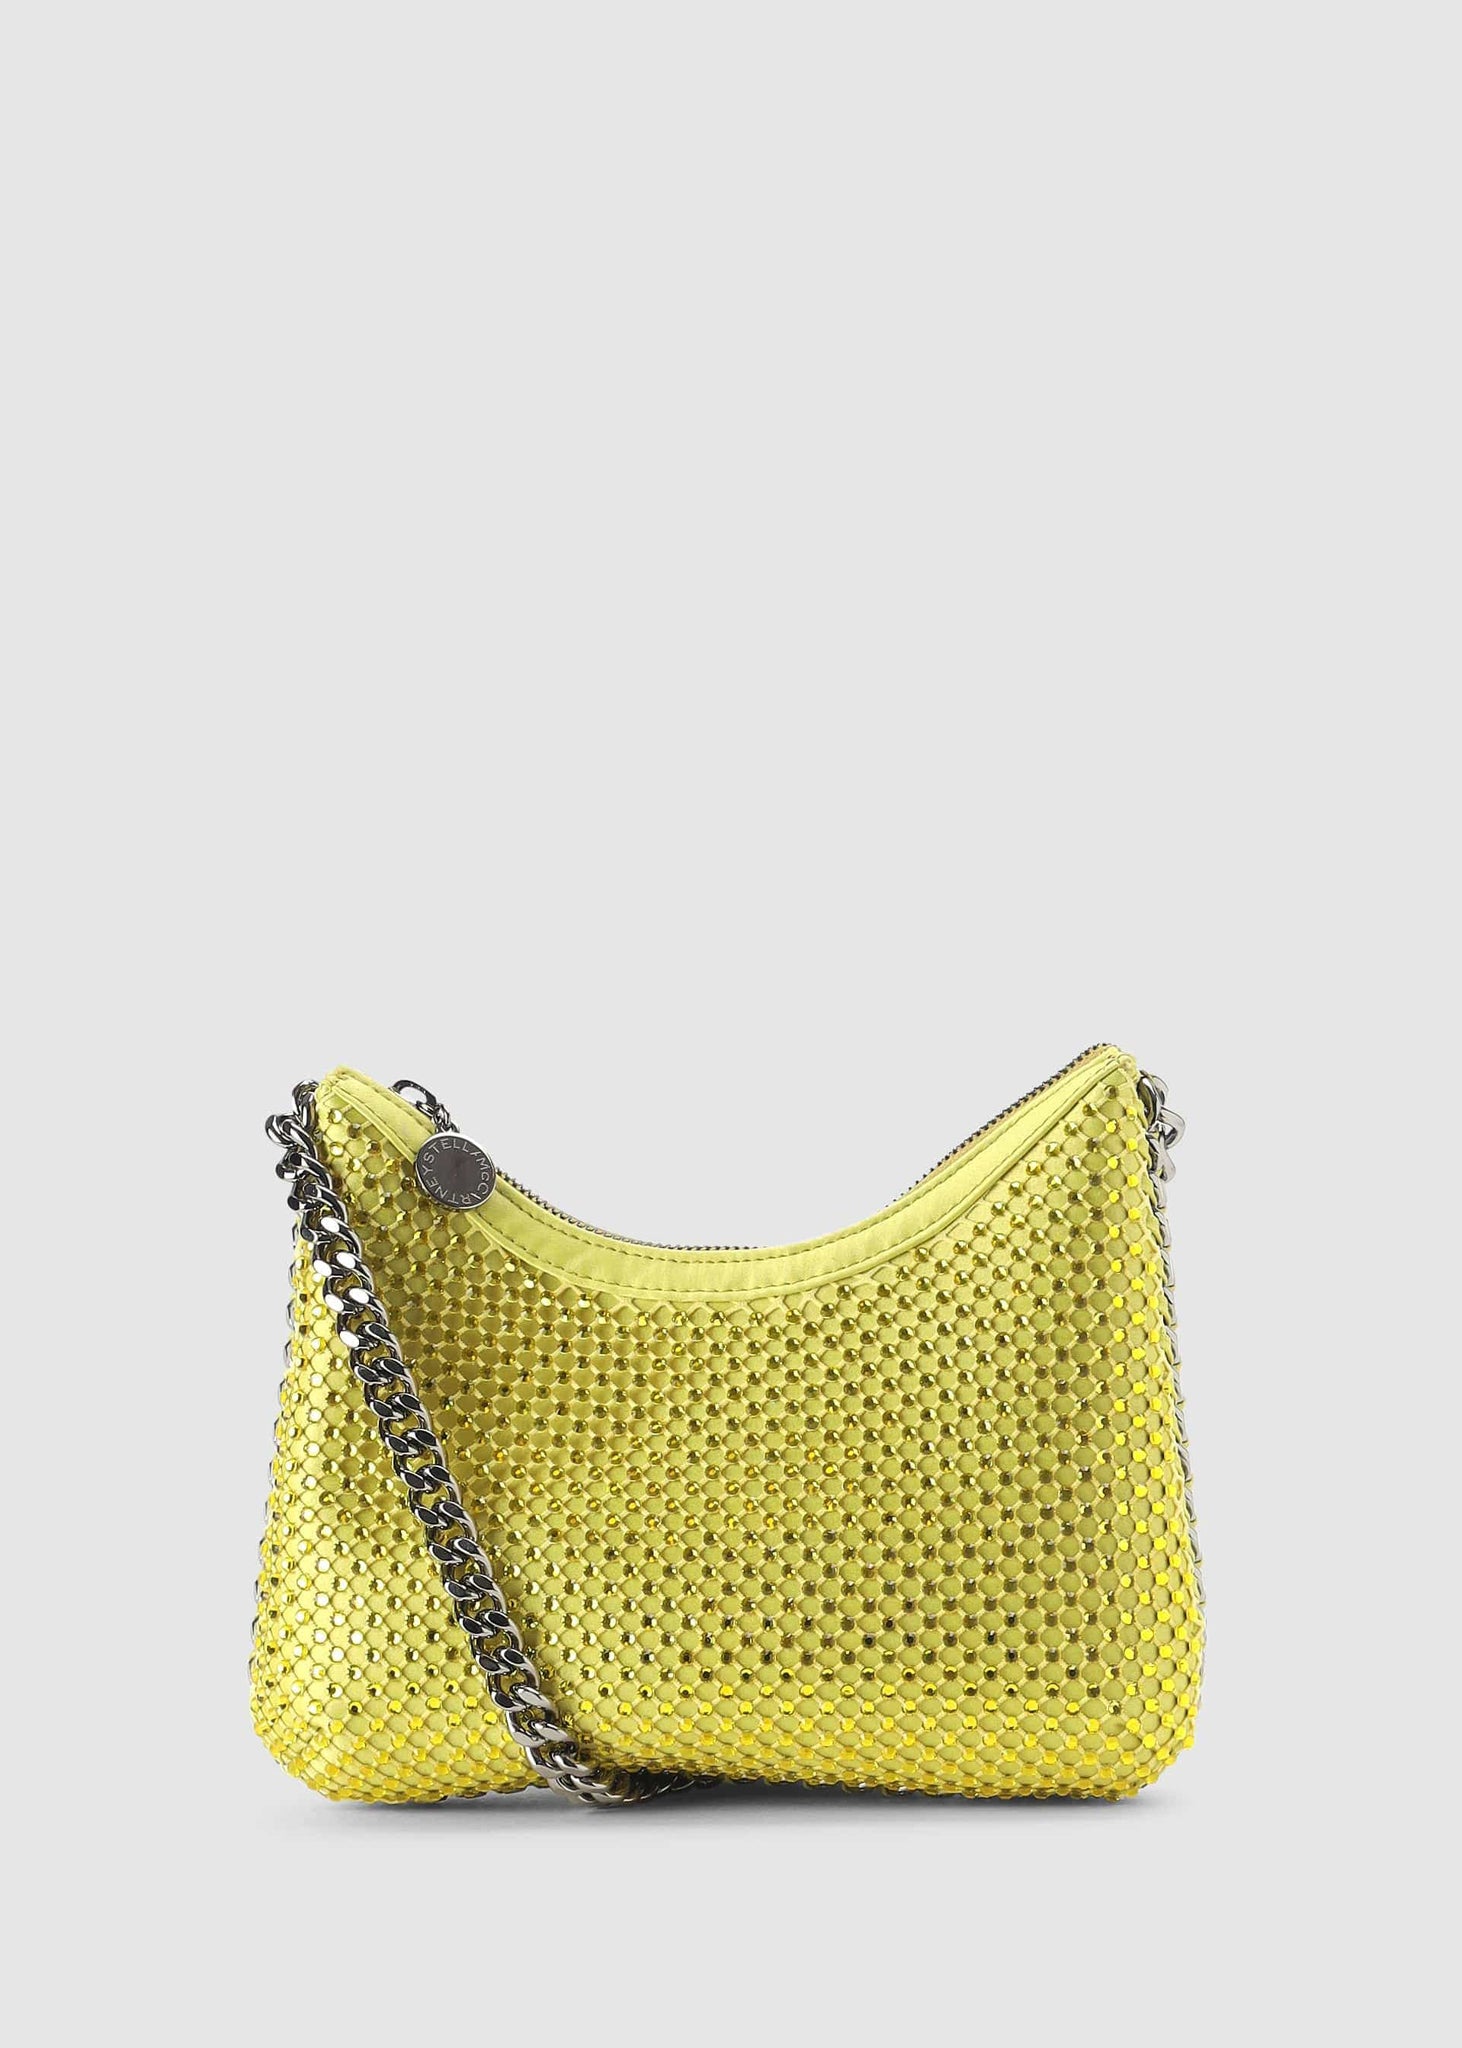 Image of Stella McCartney Women's Mini Zip Crystal Yellow Shoulder Bag